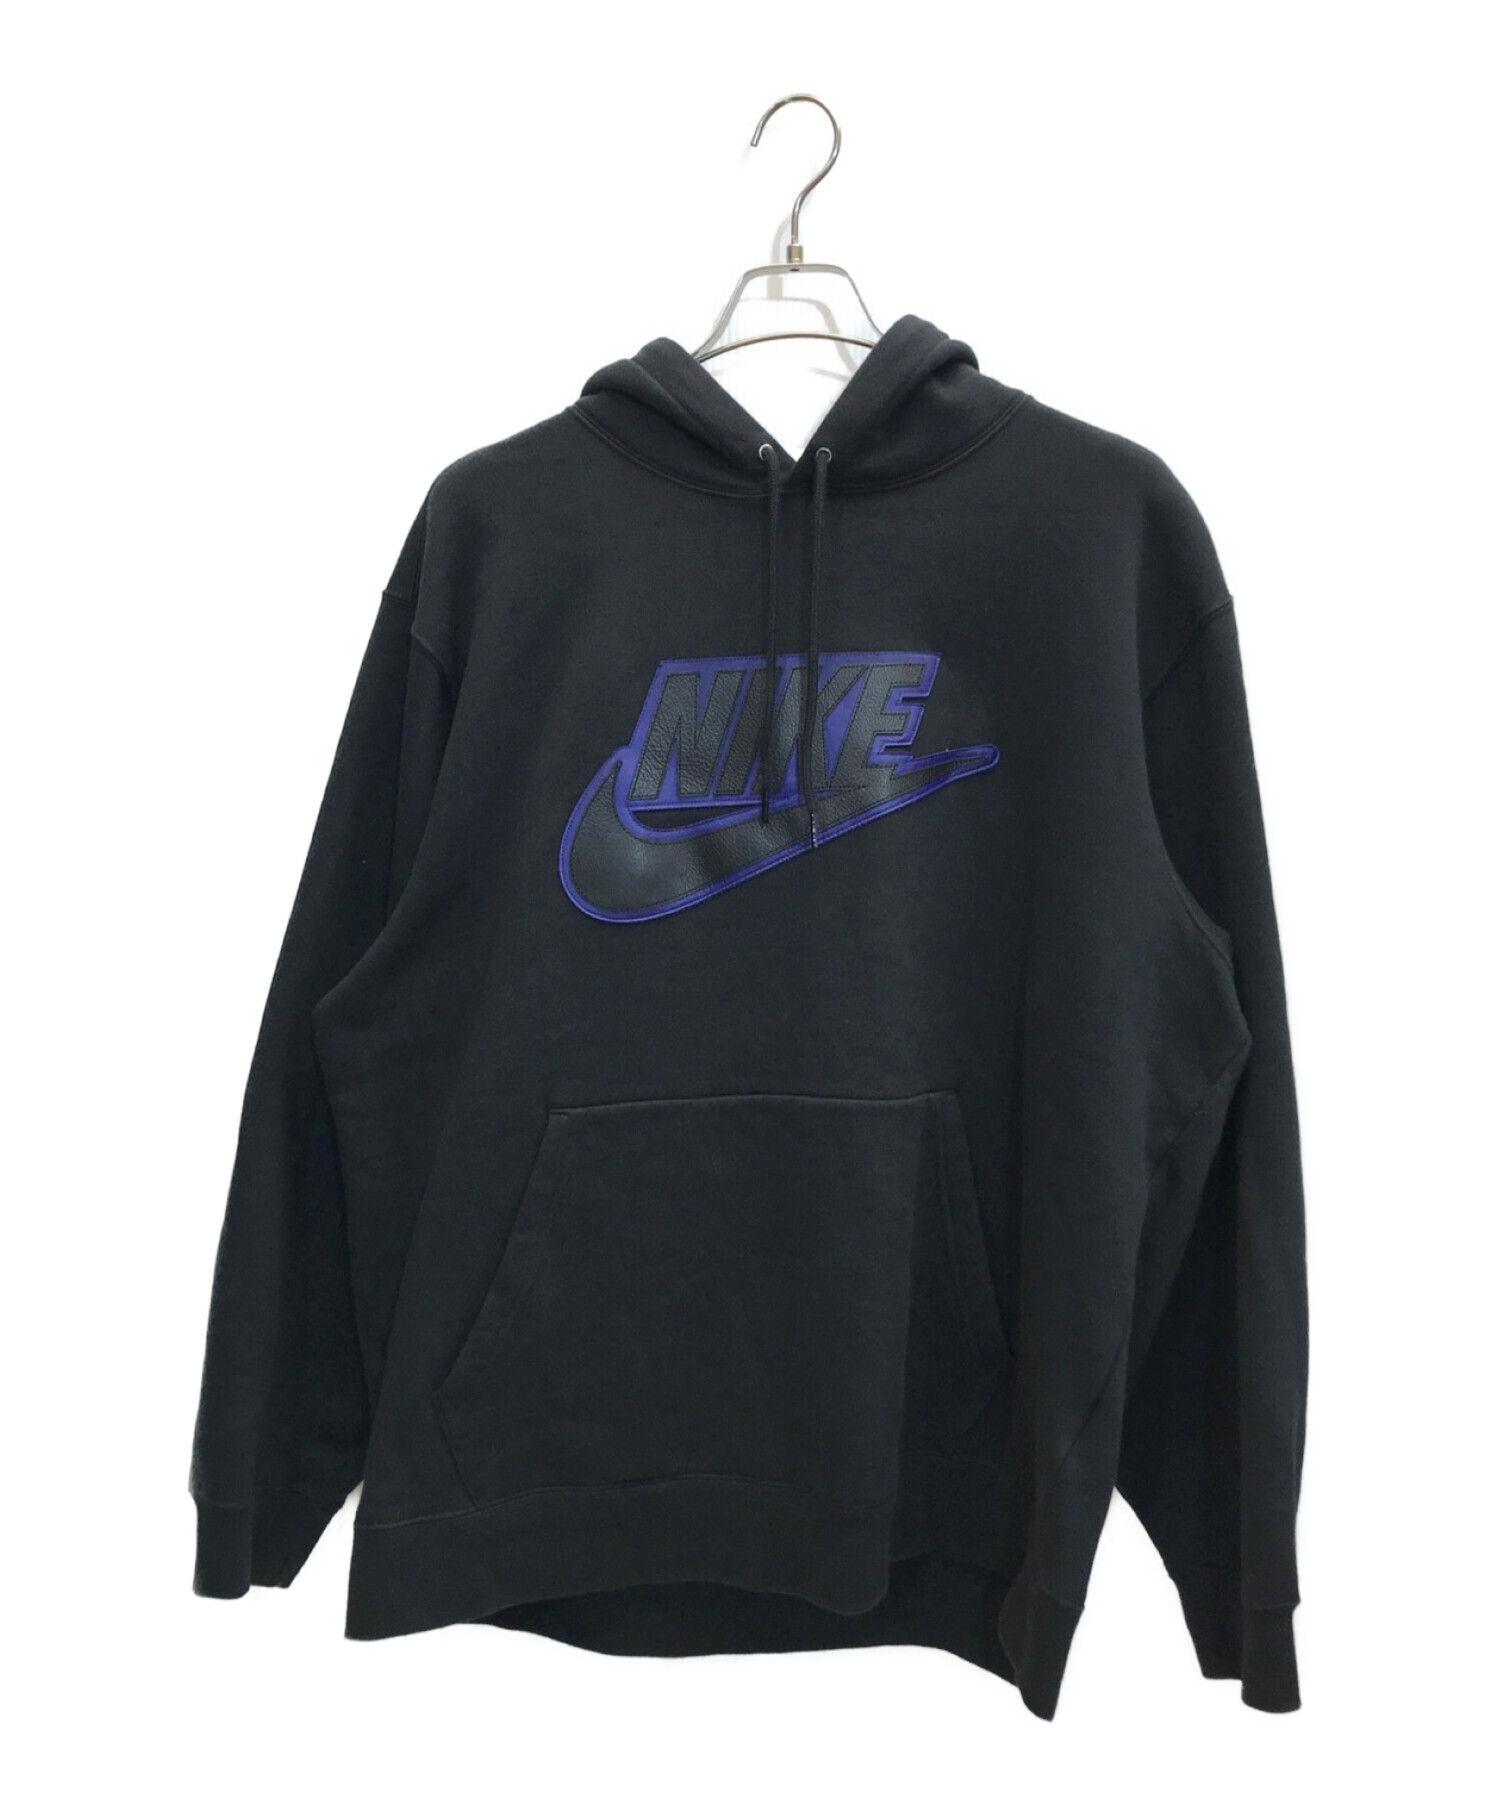 Nike Applique Hooded Sweatshirt XL